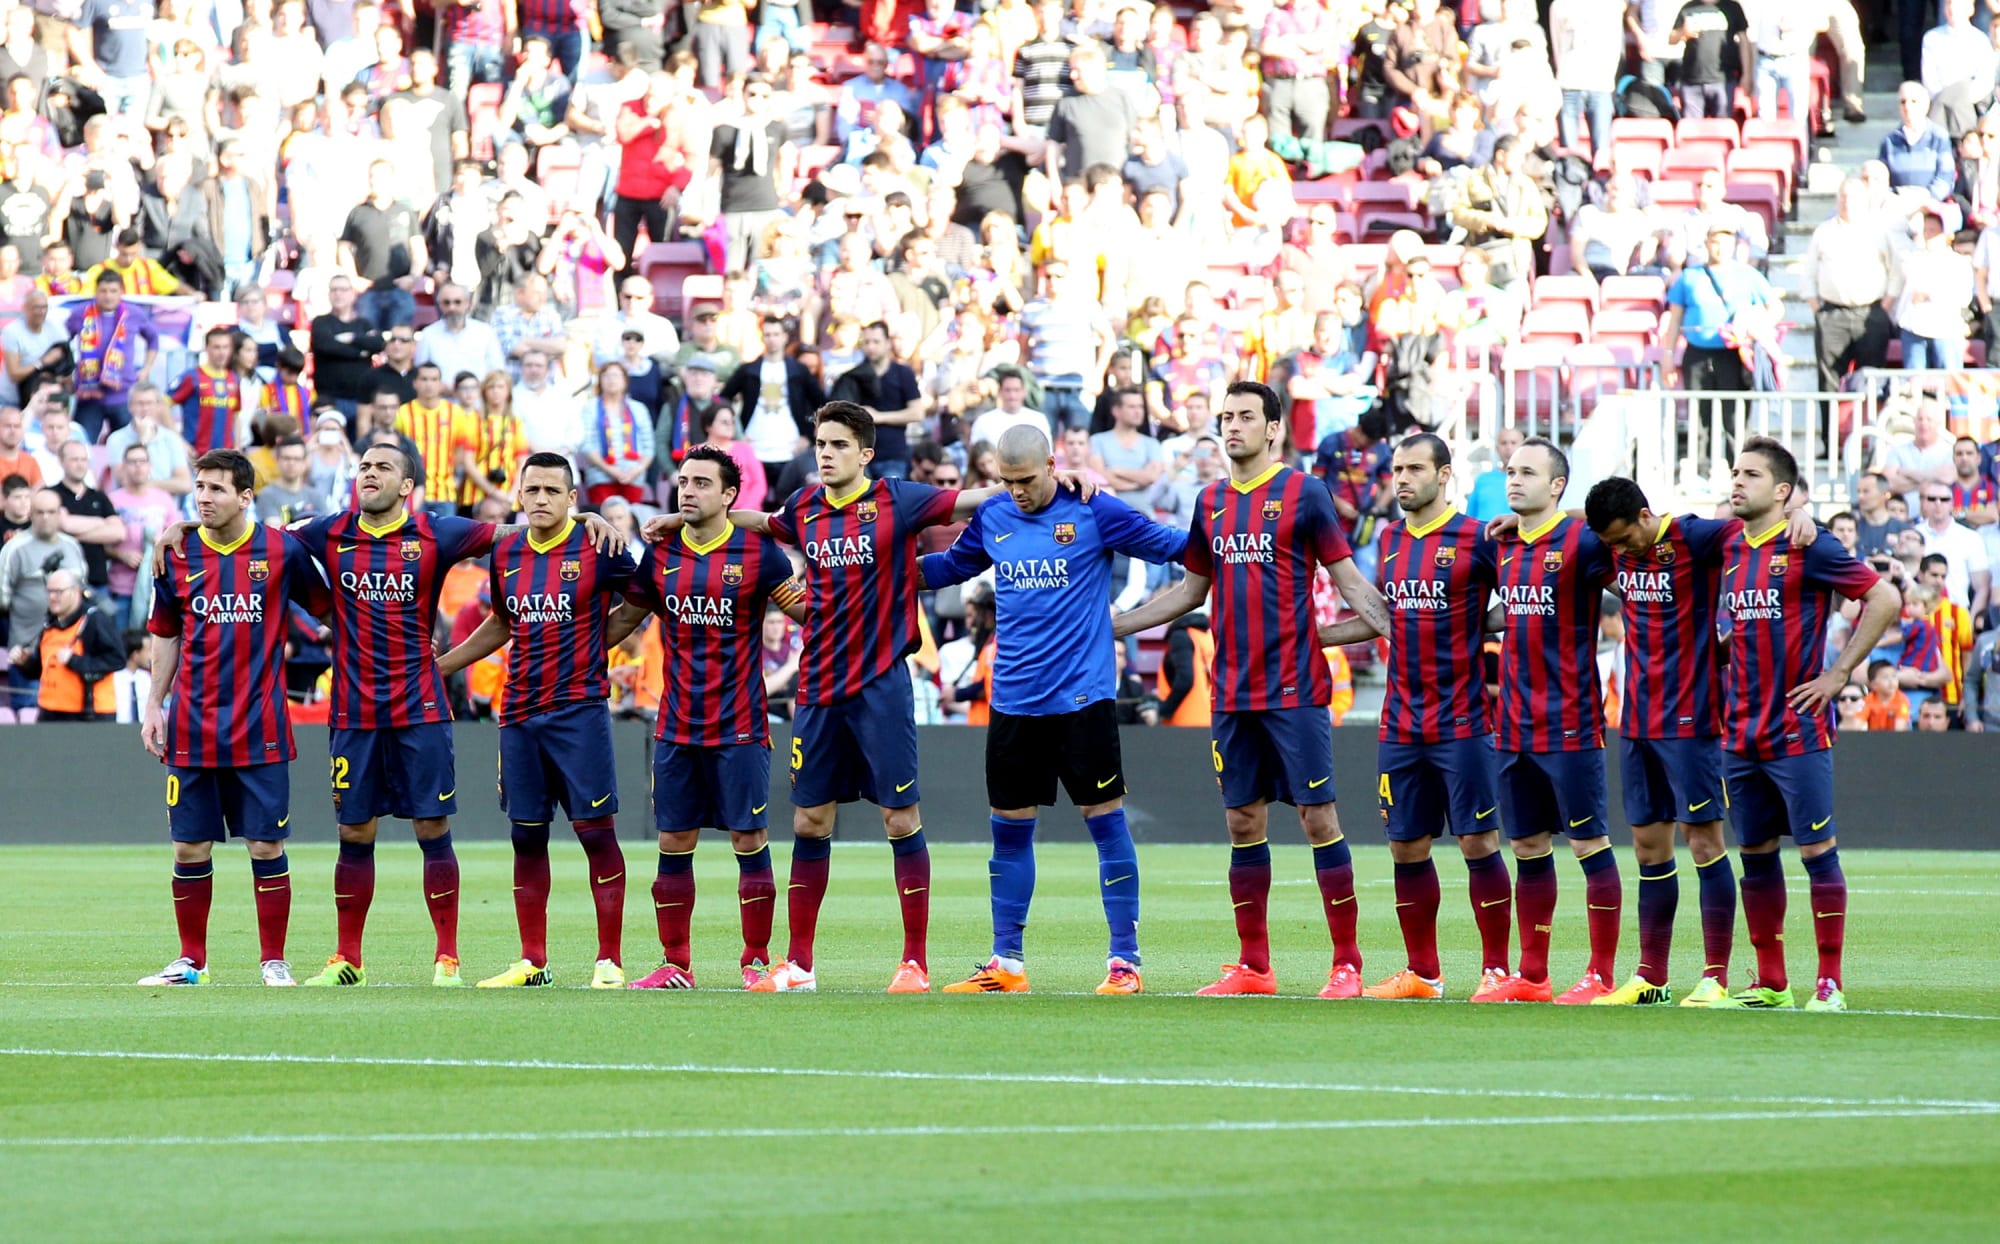 FC Barcelona travel to CA Osasuna in La Liga Matchday 15